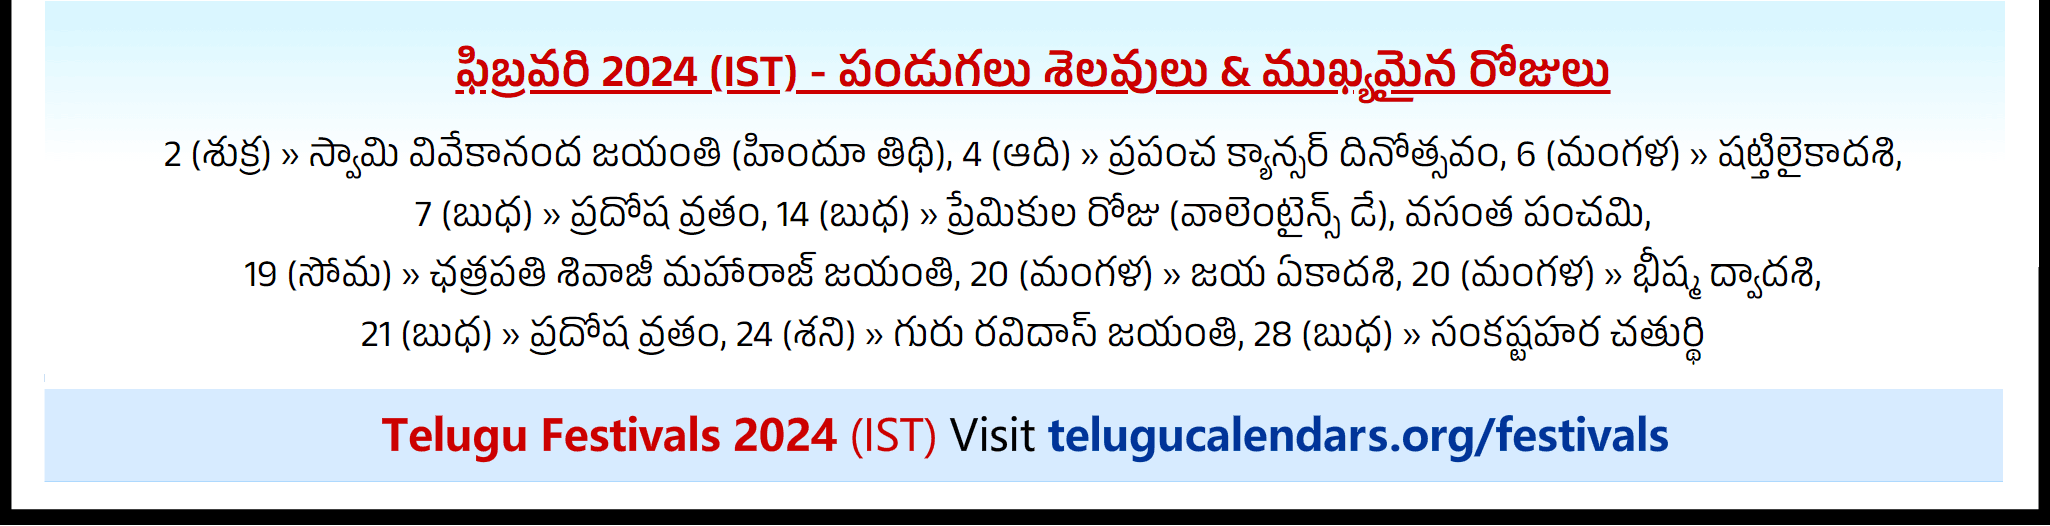 Telugu Festivals 2024 February London